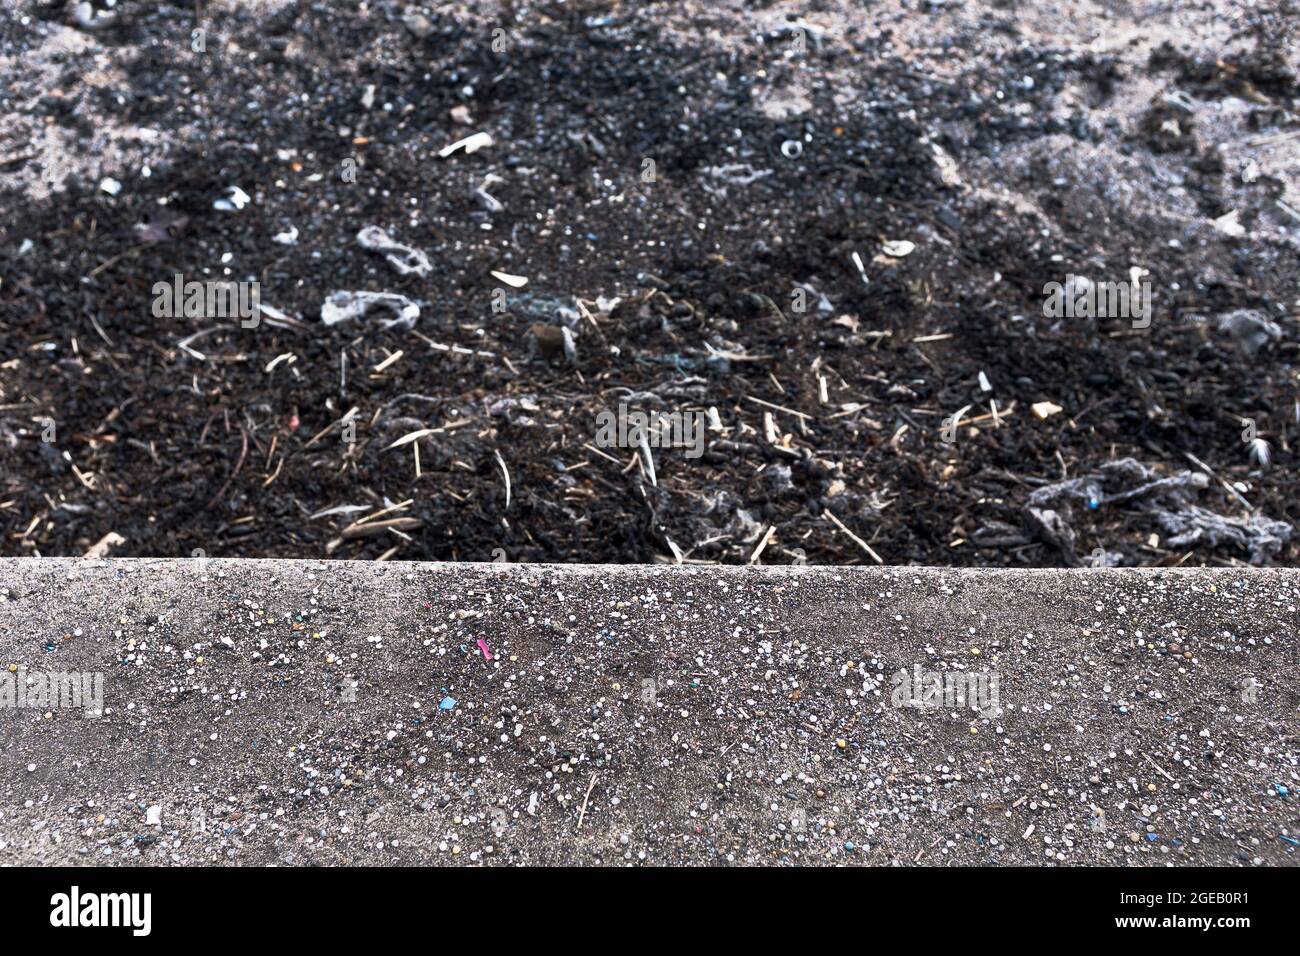 dh Beach Plastics RIVER FORTH FIFE Schottische Gärtnereien Verschmutzung Strände Mikroplastik Pellets an Land gewaschen Schottland uk Gärtnerperlen Abfall marine Stockfoto